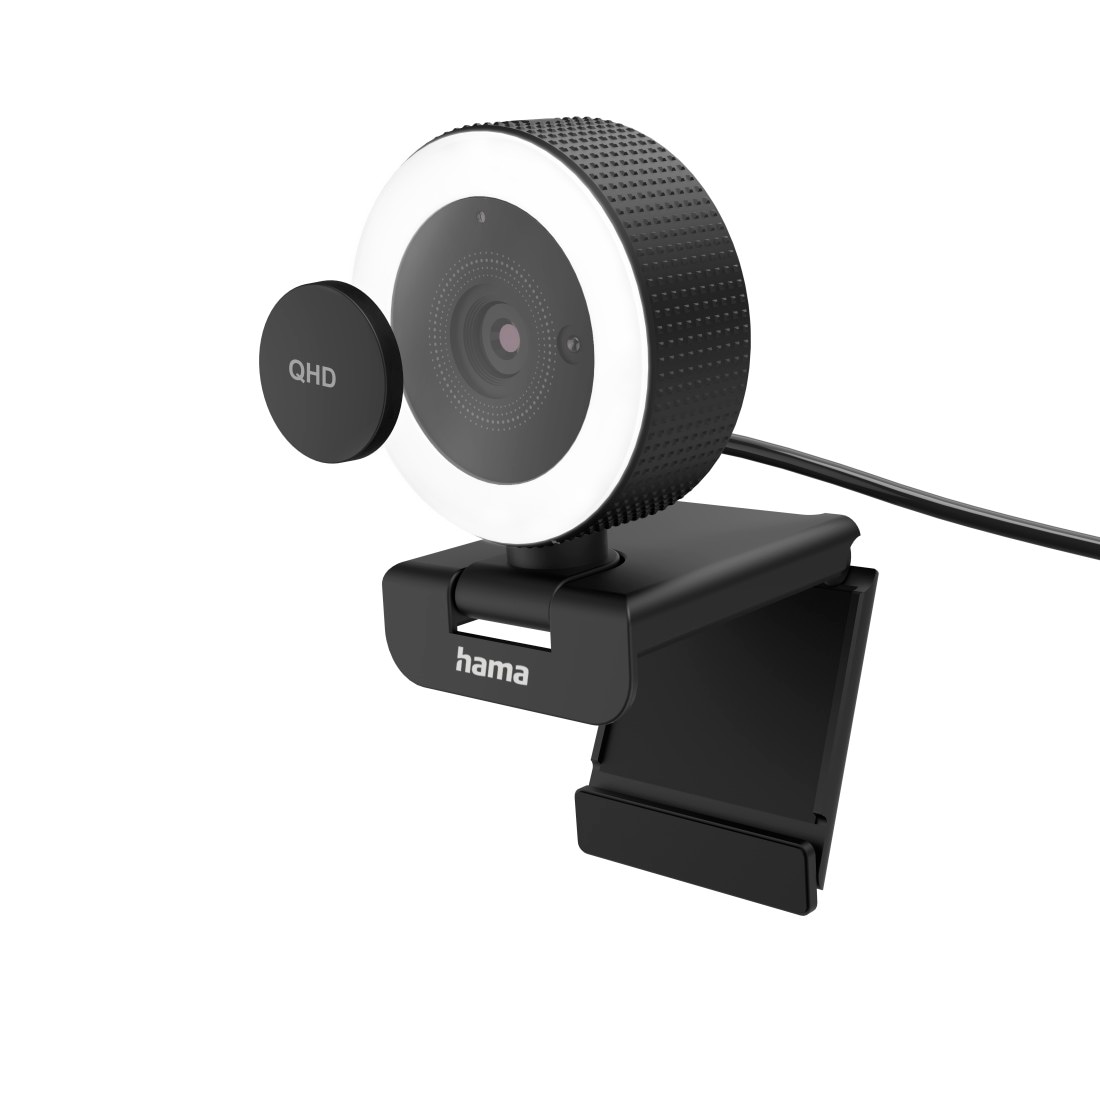 Hama Full HD-Webcam »PC Kamera, Webcam mit Ringlicht und Fernbedienung, Streaming, Gaming«, QHD, Beleuchtung, Neigbar, Drehbar, Mikrofon, LED Status, Farbe Schwarz